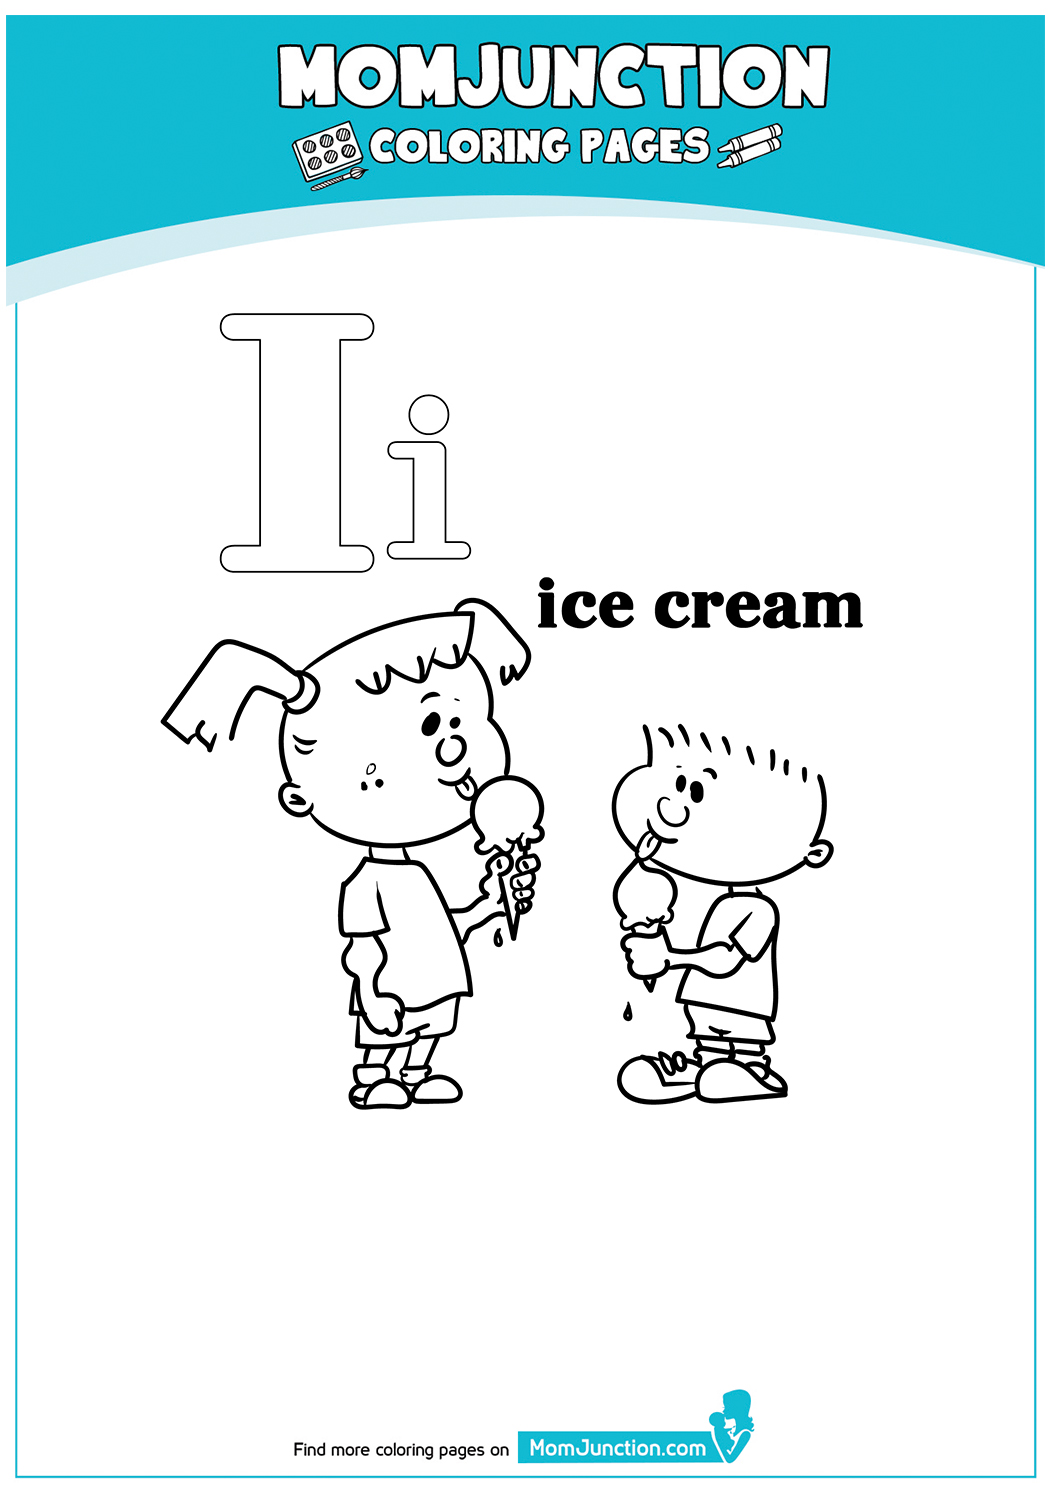 The-I-For-Ice-Cream-17